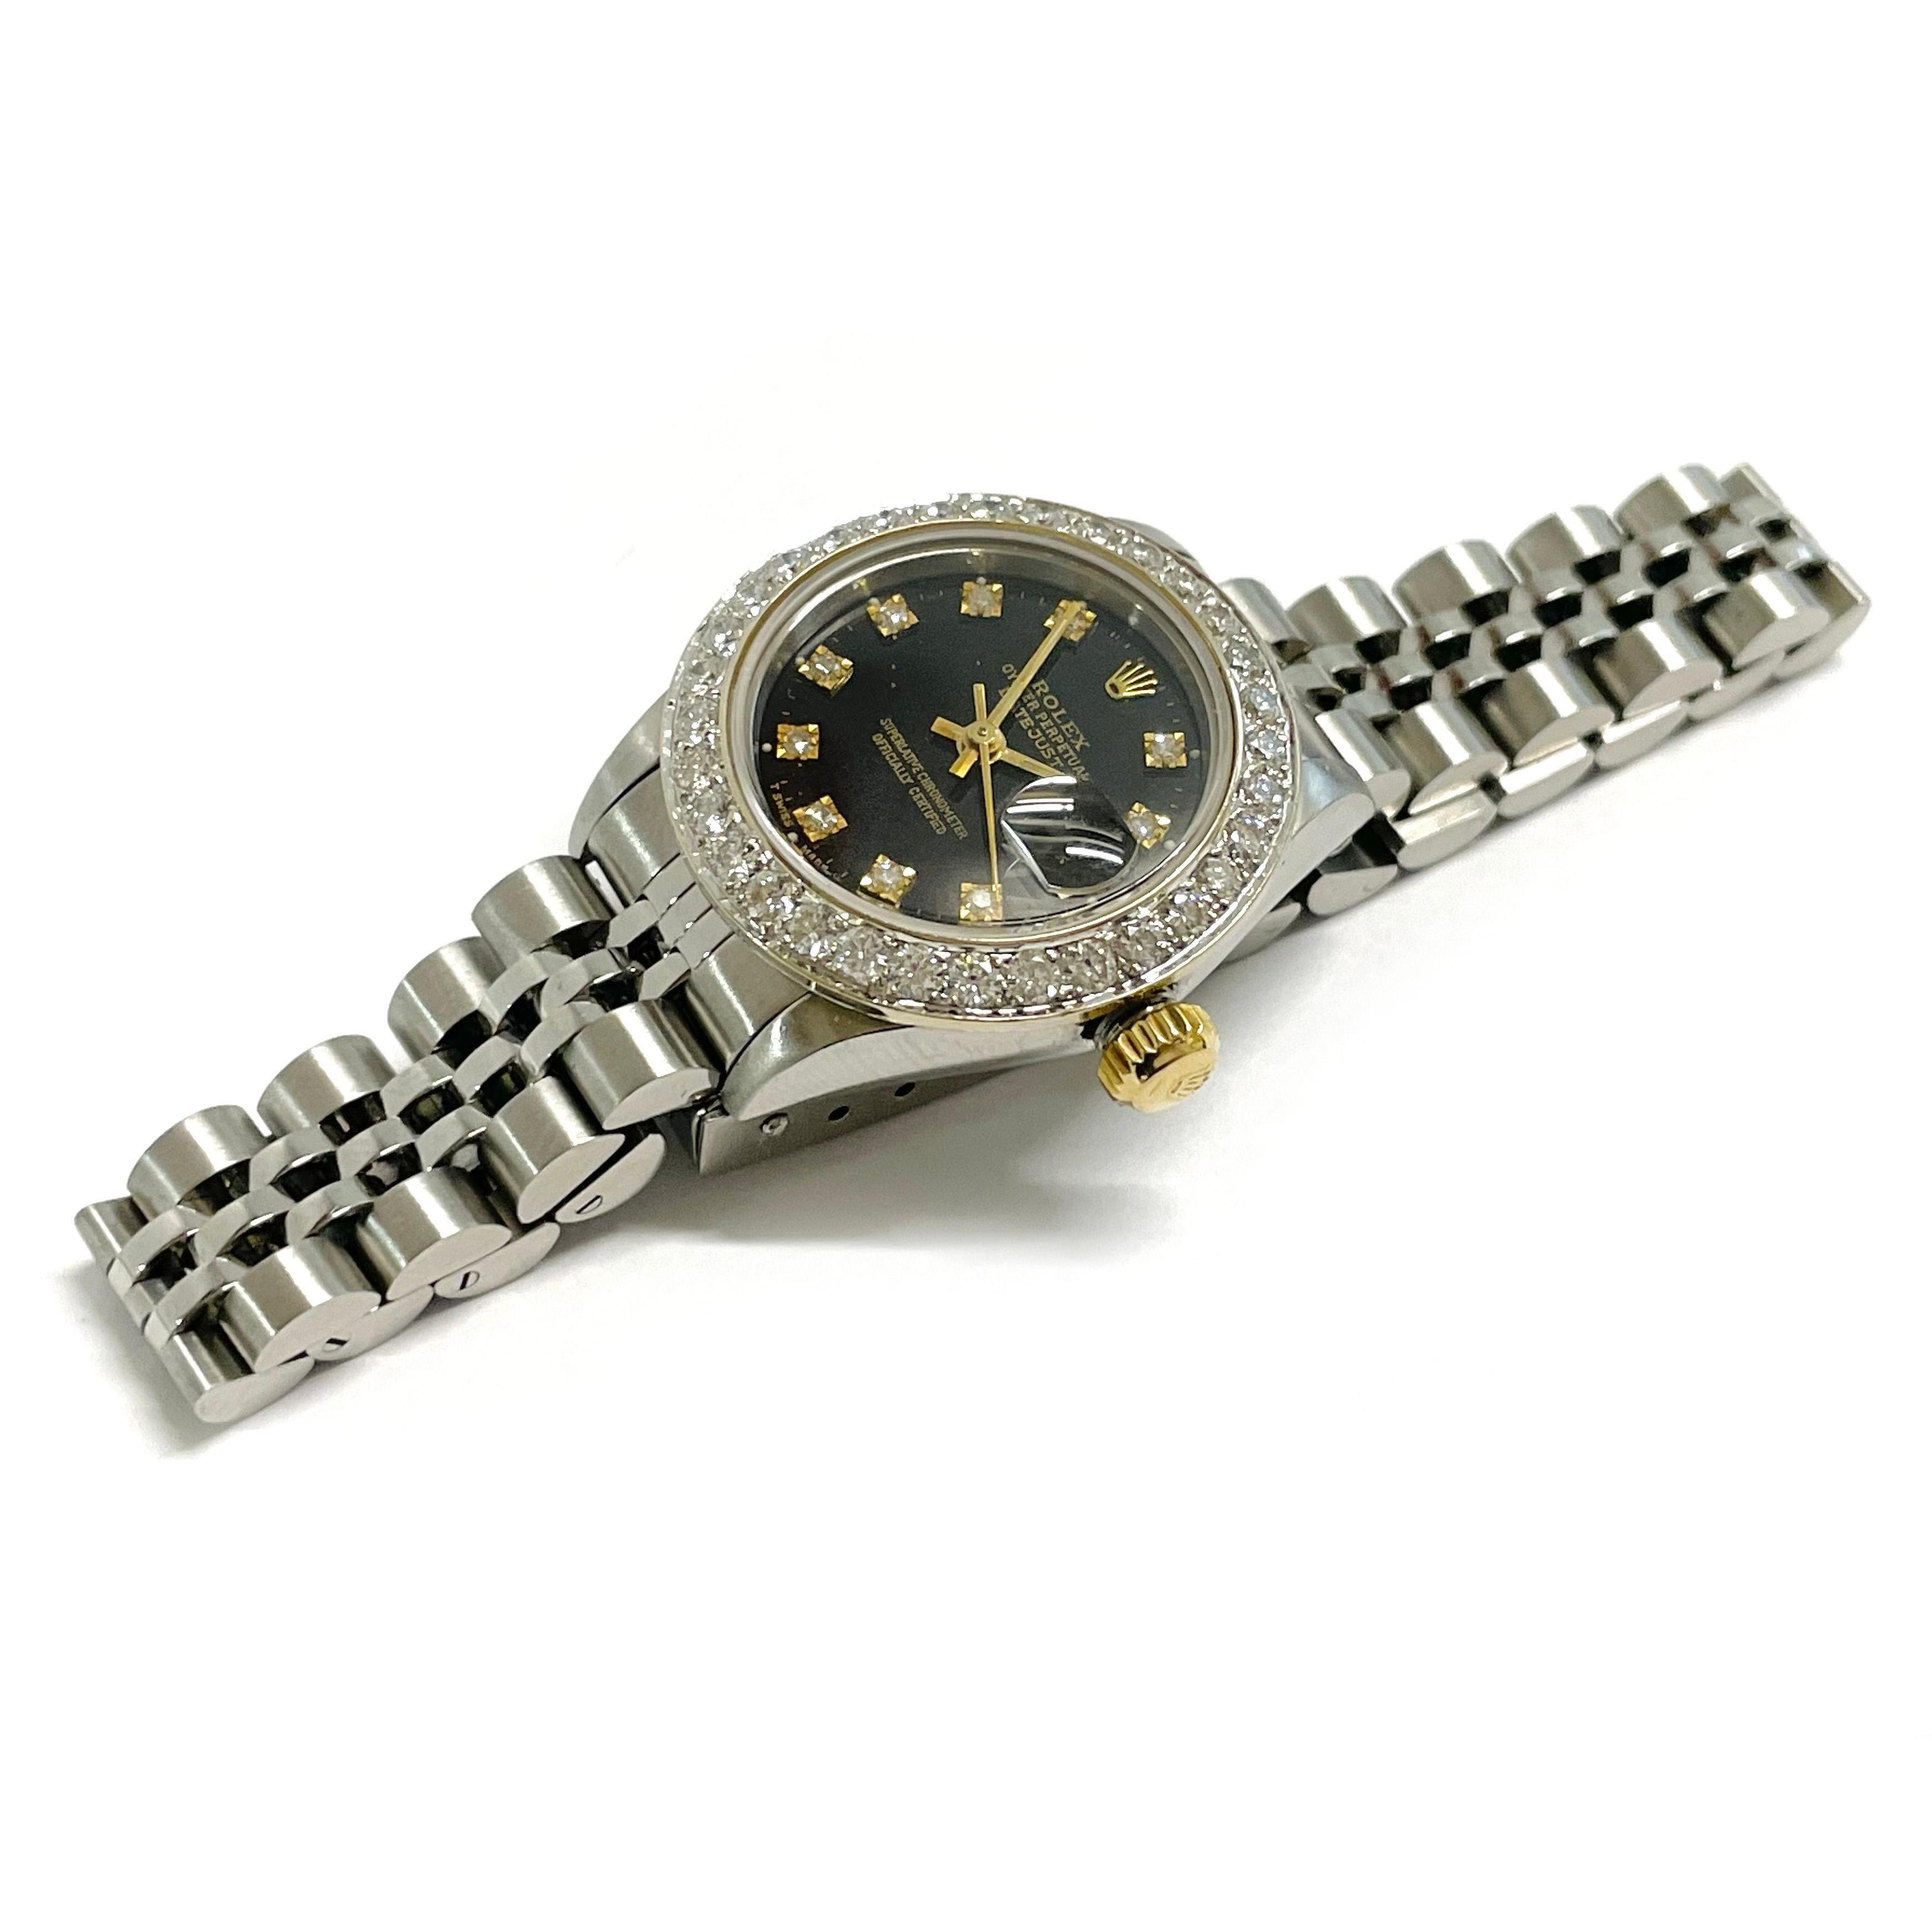 Ladies Two-Tone Rolex Oyster Perpetual Datejust Diamond Bezel Watch, Case/Box 5